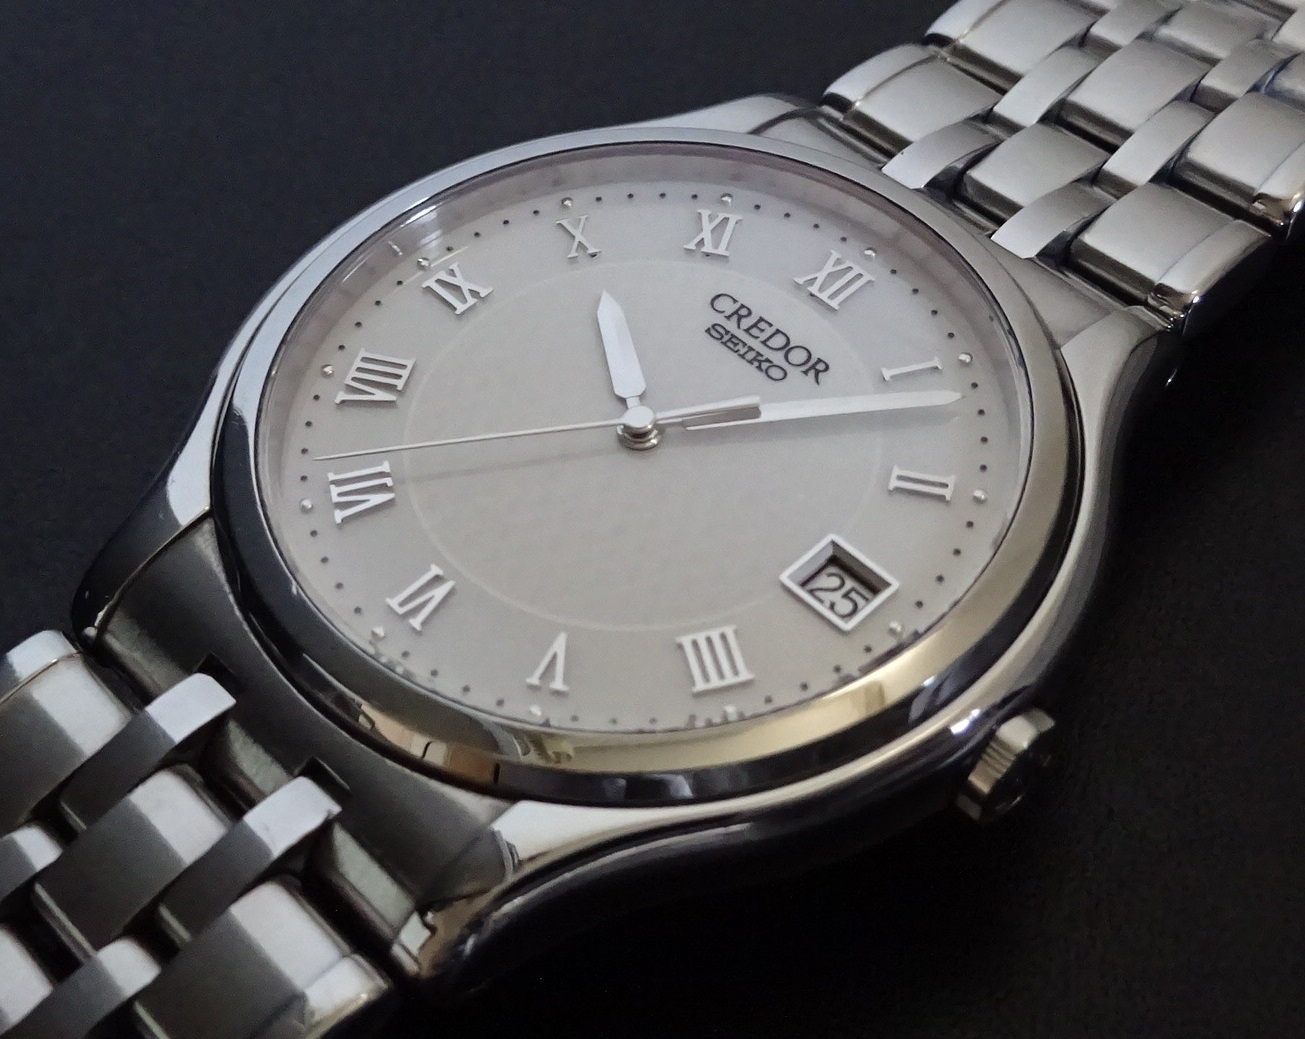 SEIKO セイコー メンズ腕時計 クレドール 8J86-7A00 SS ホワイト文字盤 クォーツ 仕上げ済